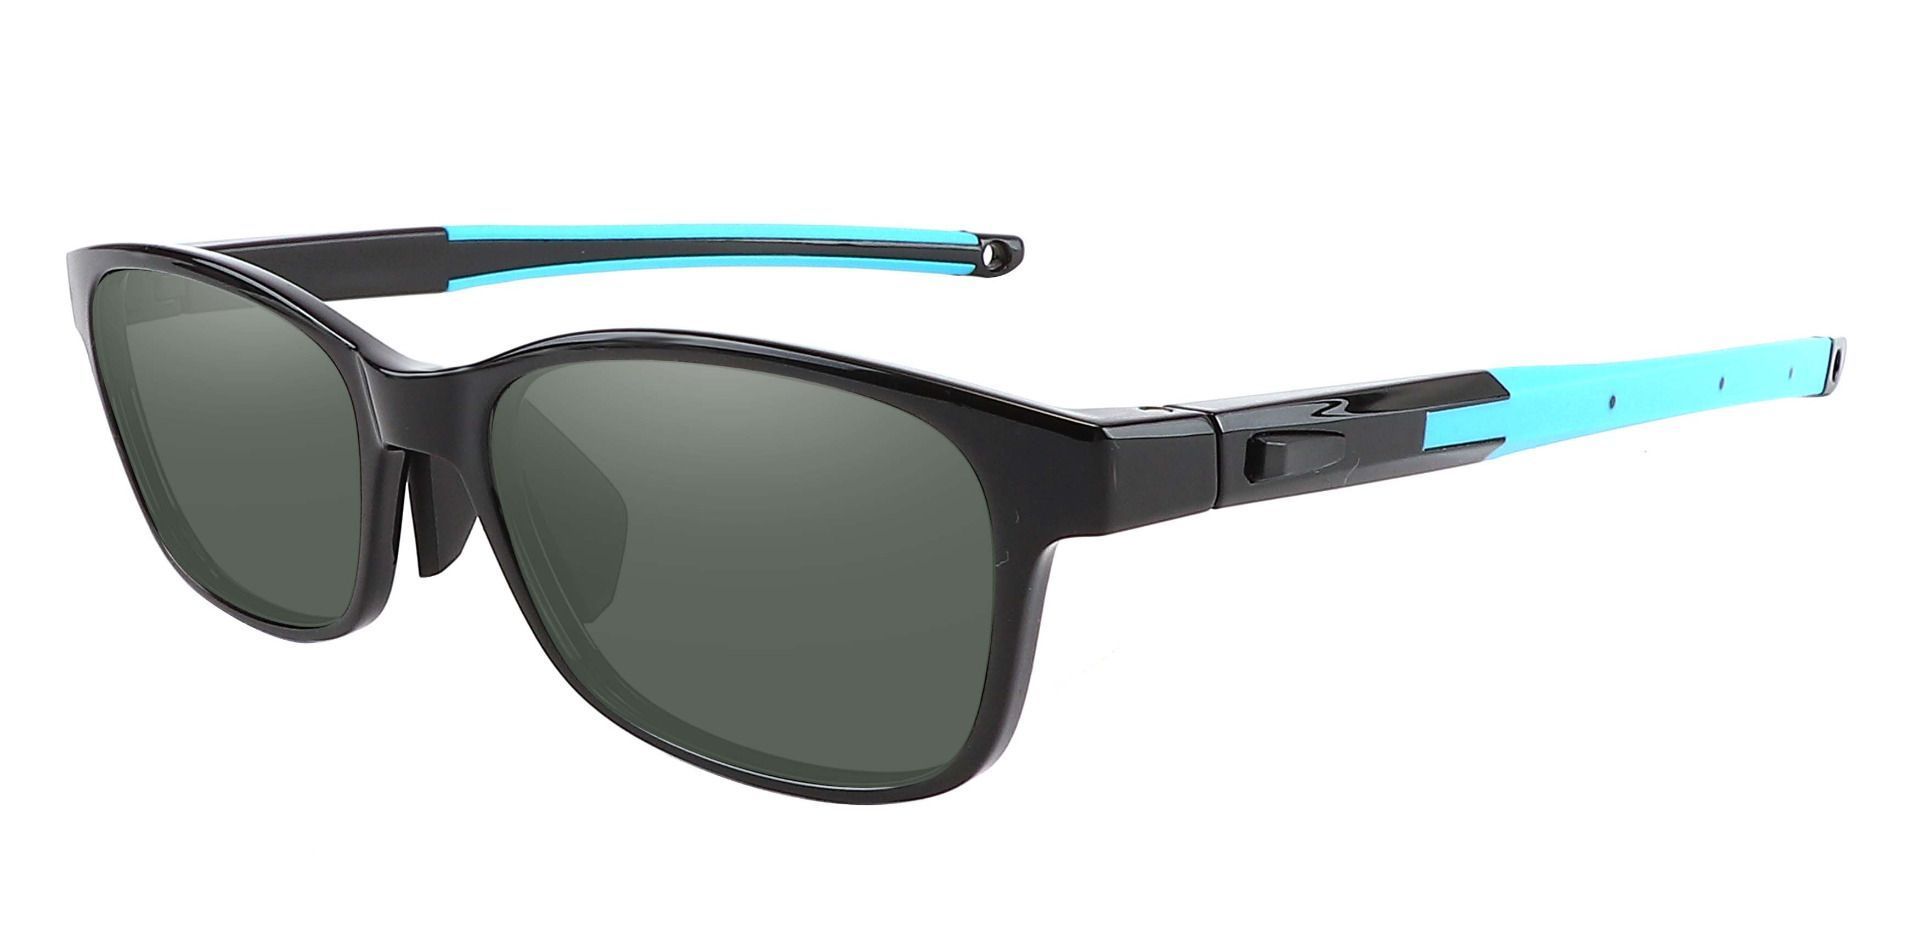 Higgins Rectangle Non-Rx Sunglasses - Black Frame With Green Lenses